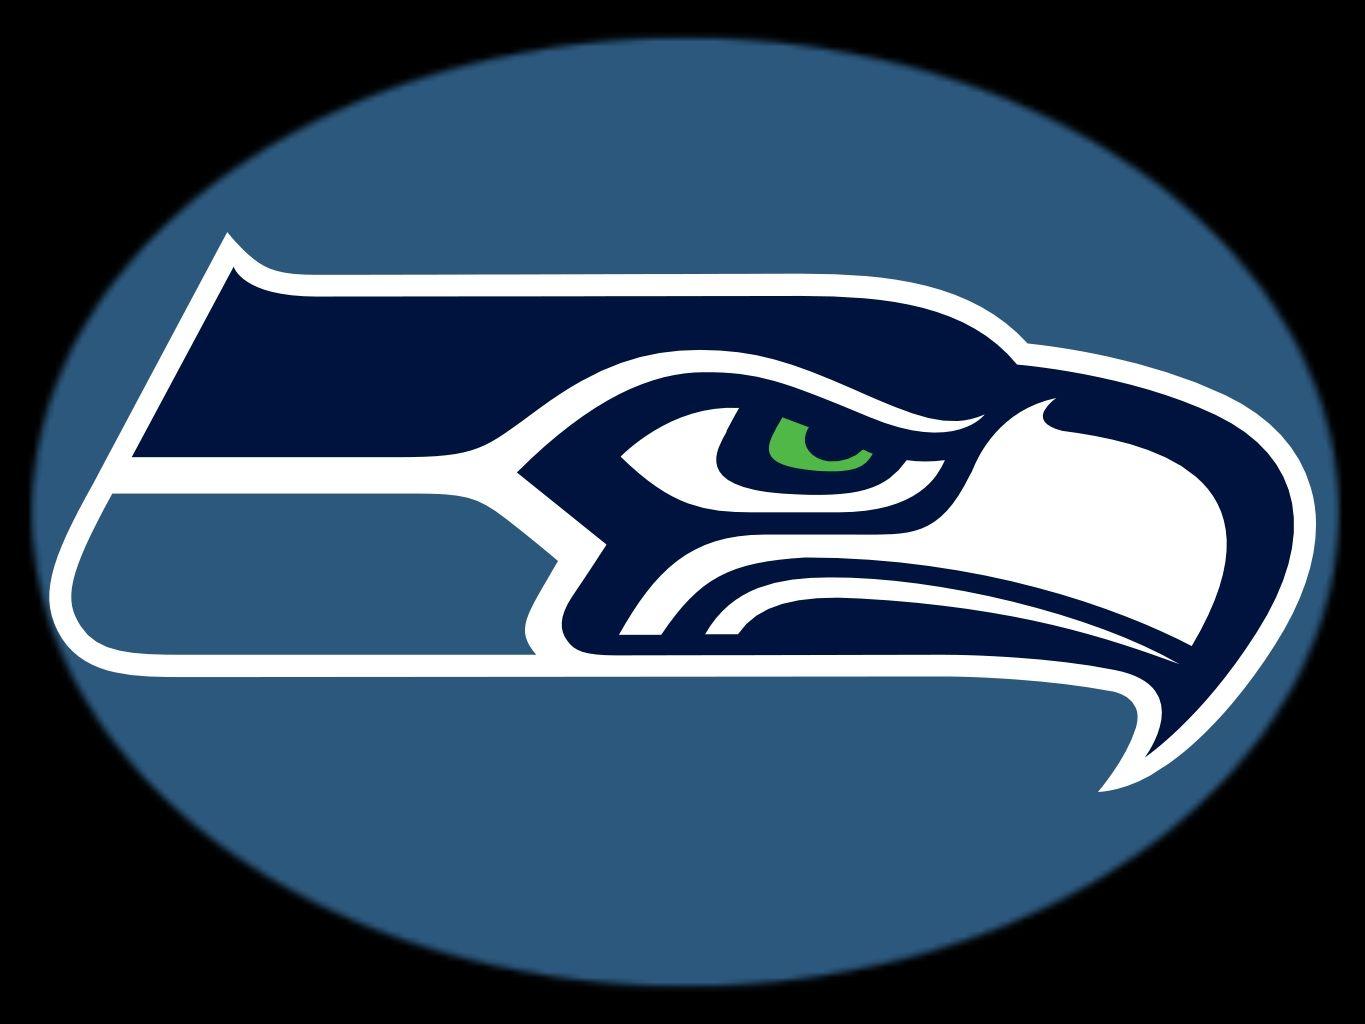 NFL Seahawks Logo - Seattle Seahawks - NFL logo | Sports Teams and Athletes | Seahawks ...